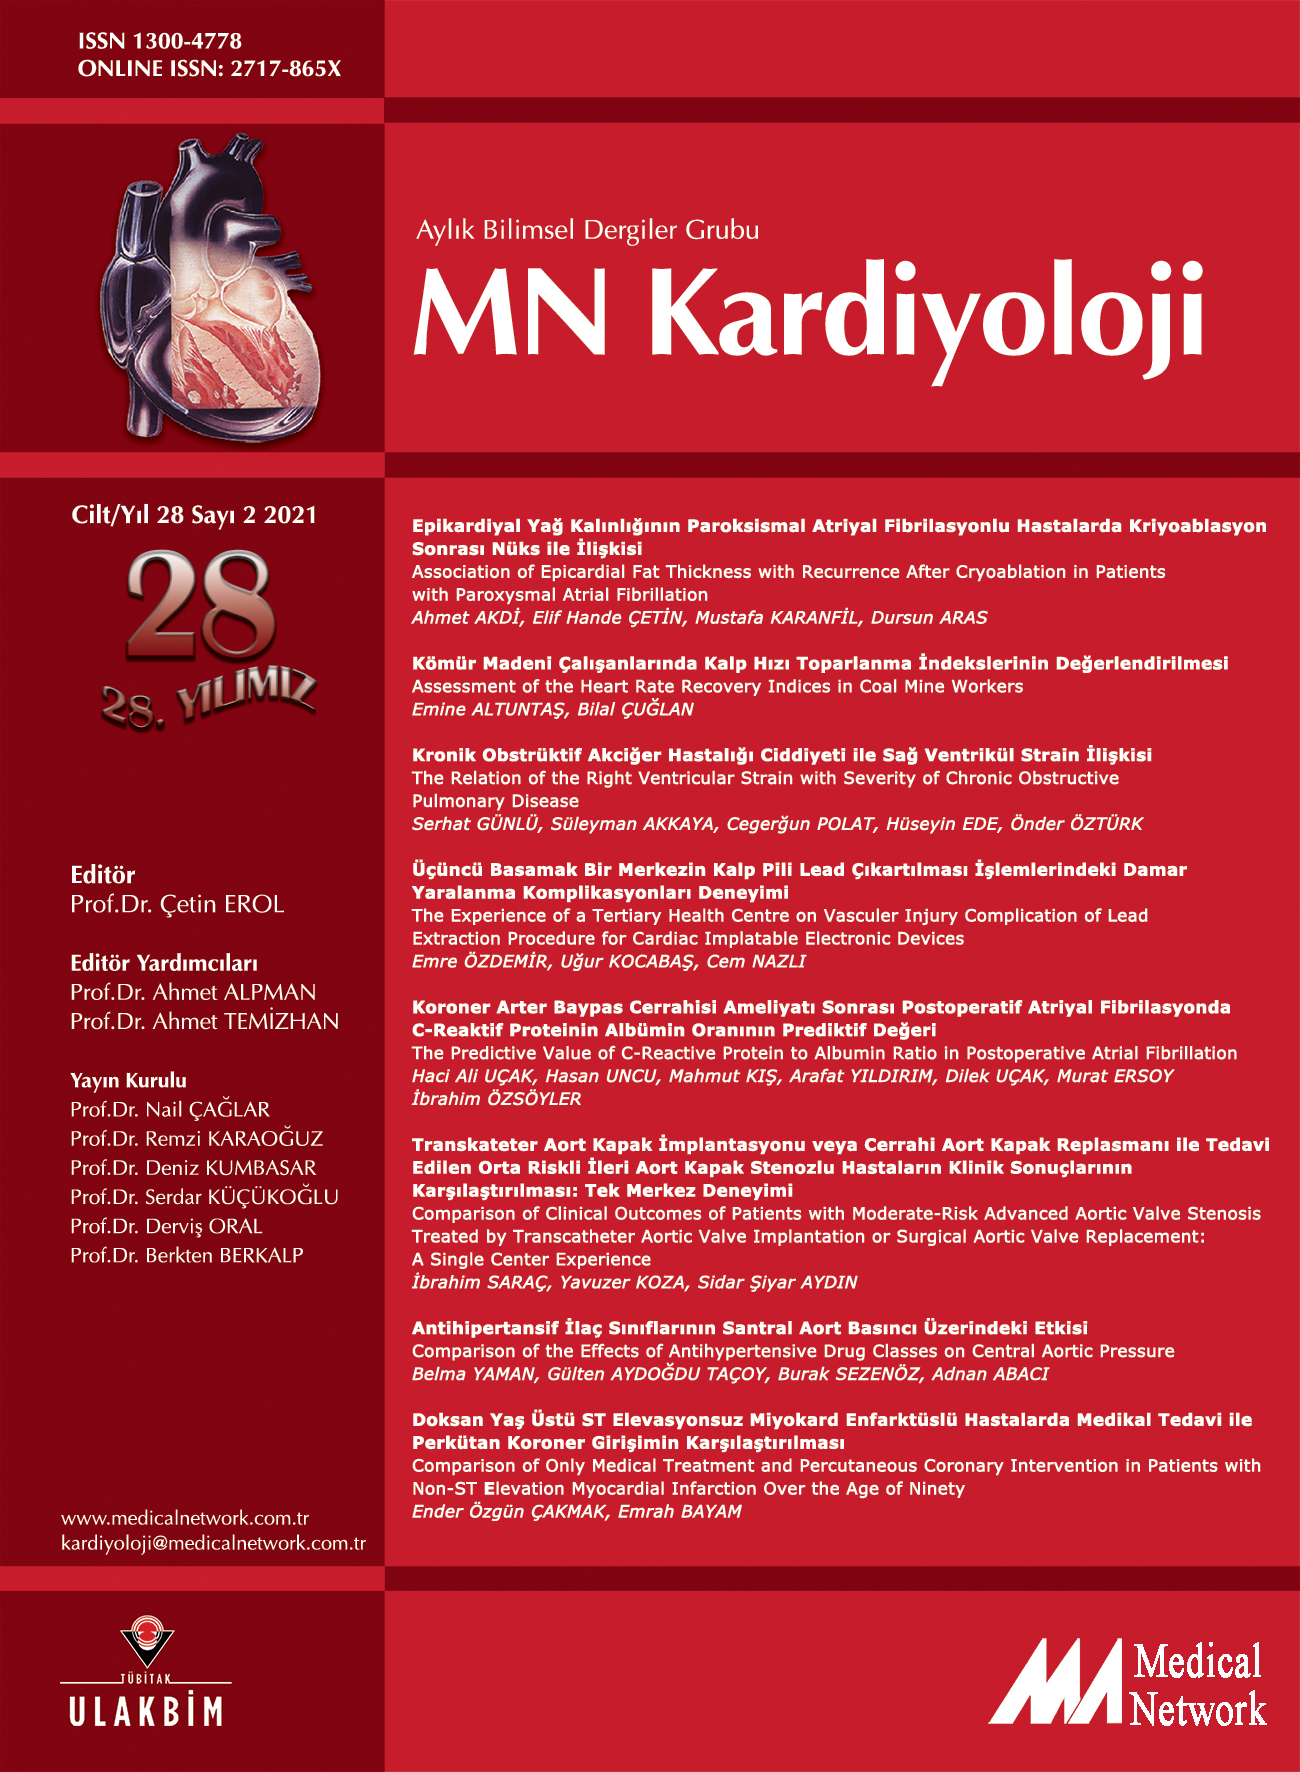 <p>MN Kardiyoloji Cilt: 28 Say: 2 2021 MN Cardiology Volume: 28 No: 2 2021</p>